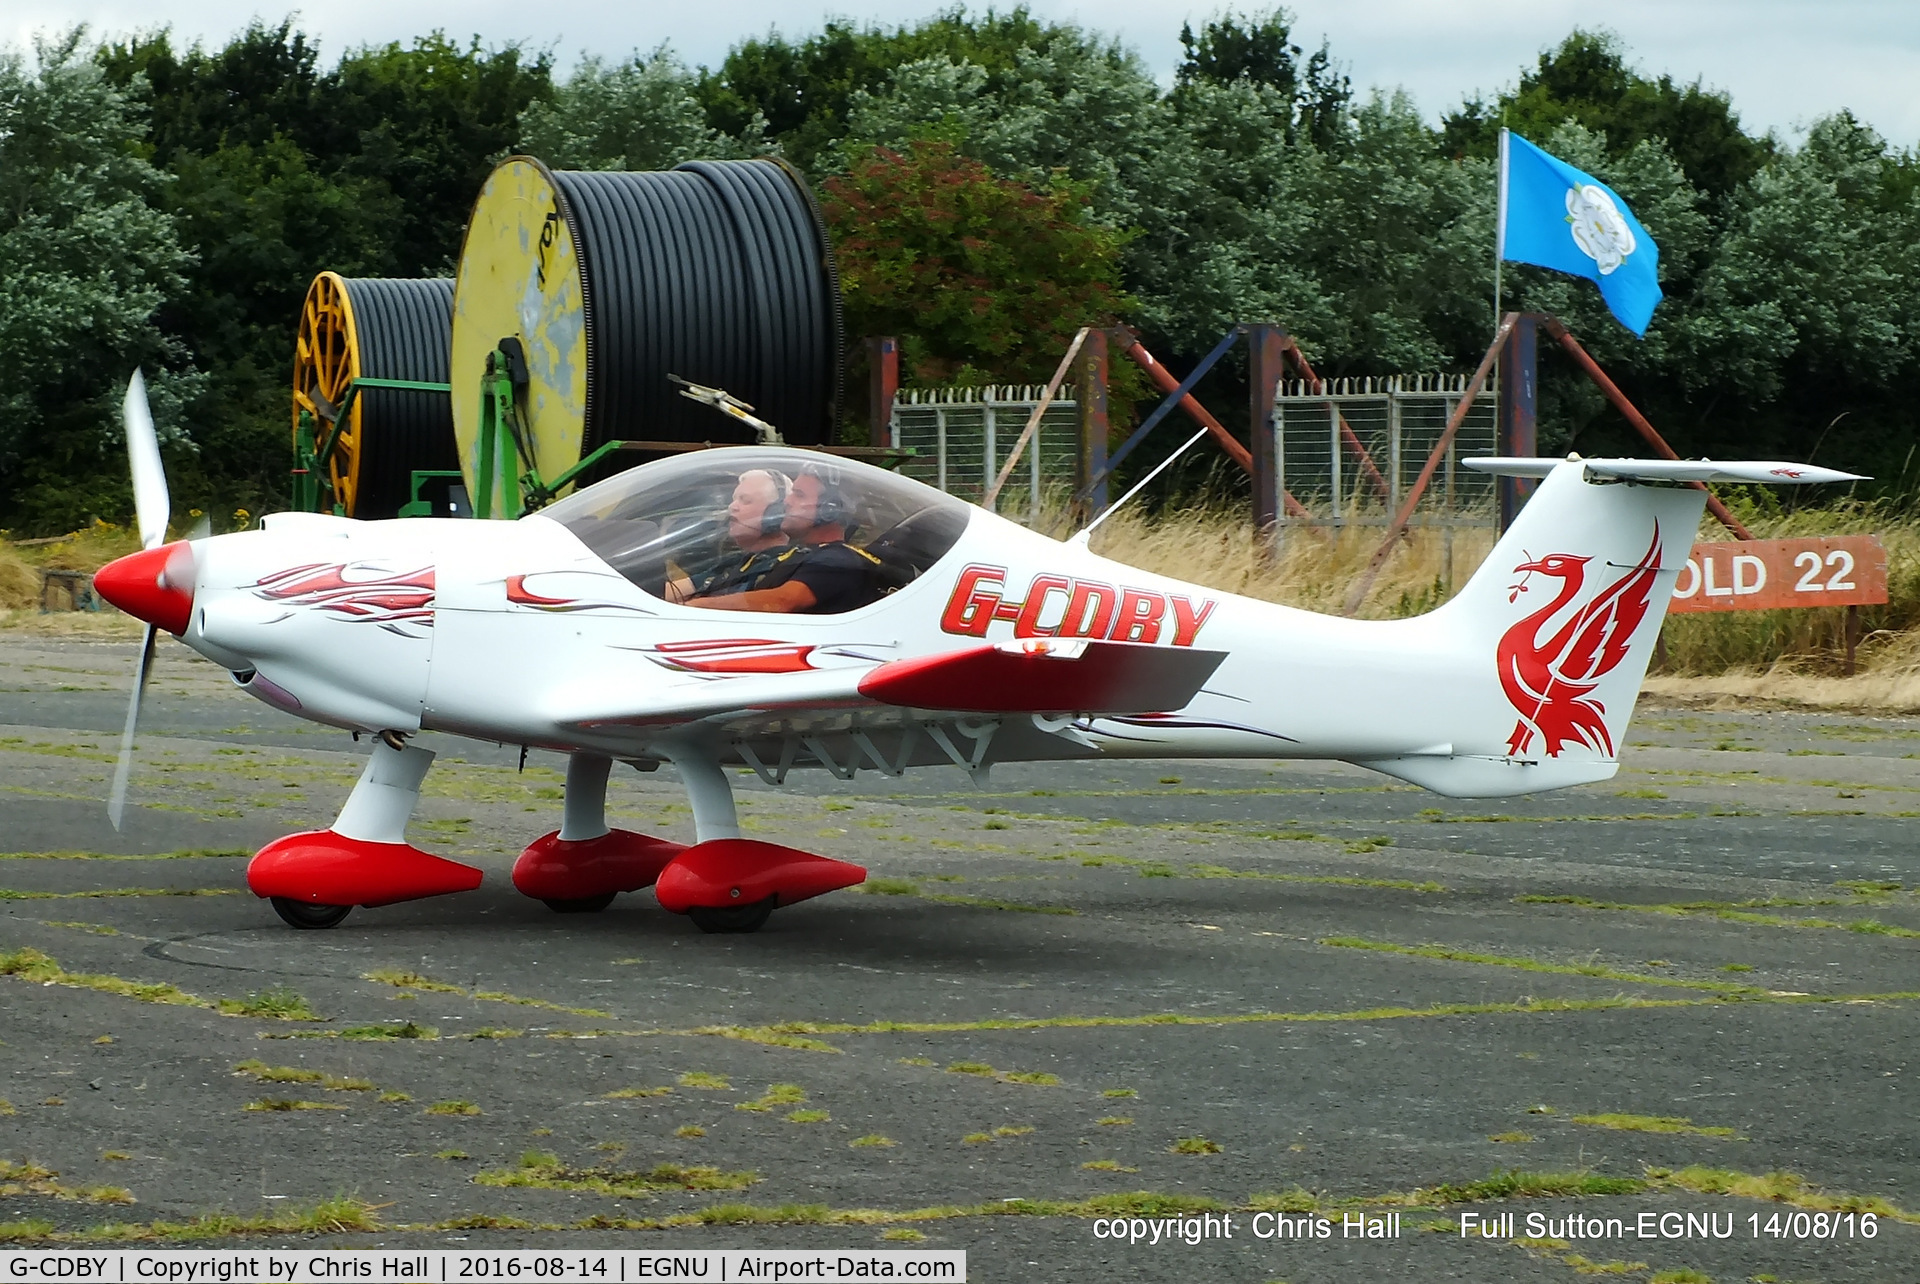 G-CDBY, 2004 Dyn'Aero MCR-01 ULC Banbi C/N PFA 301B-14269, at the LAA Vale of York Strut fly-in, Full Sutton